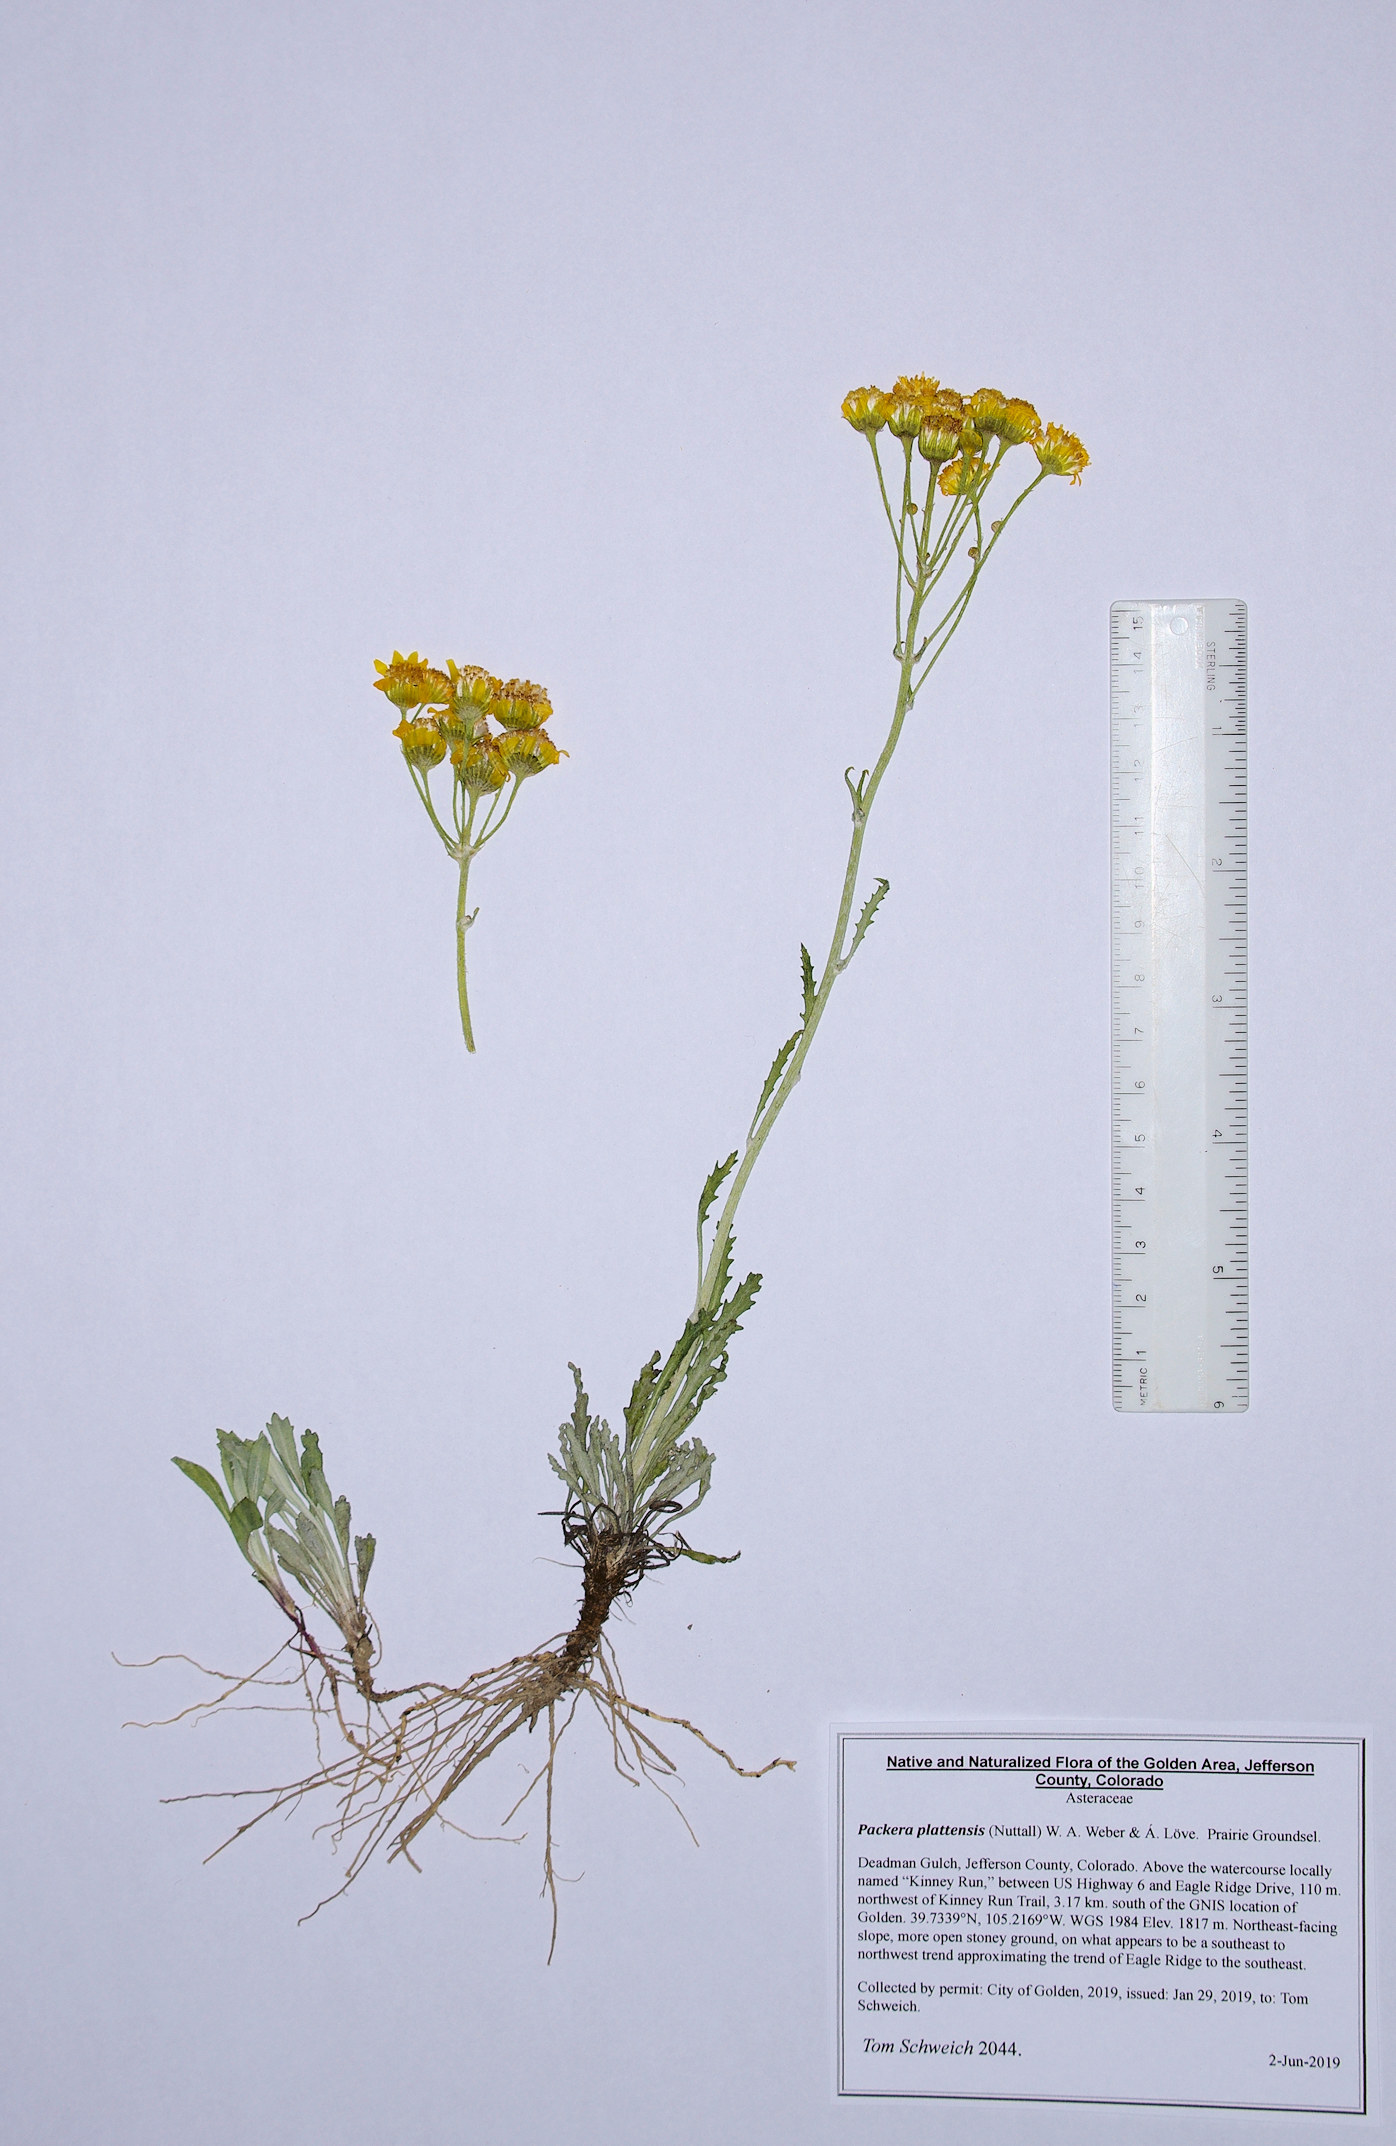 Asteraceae Packera fendleri